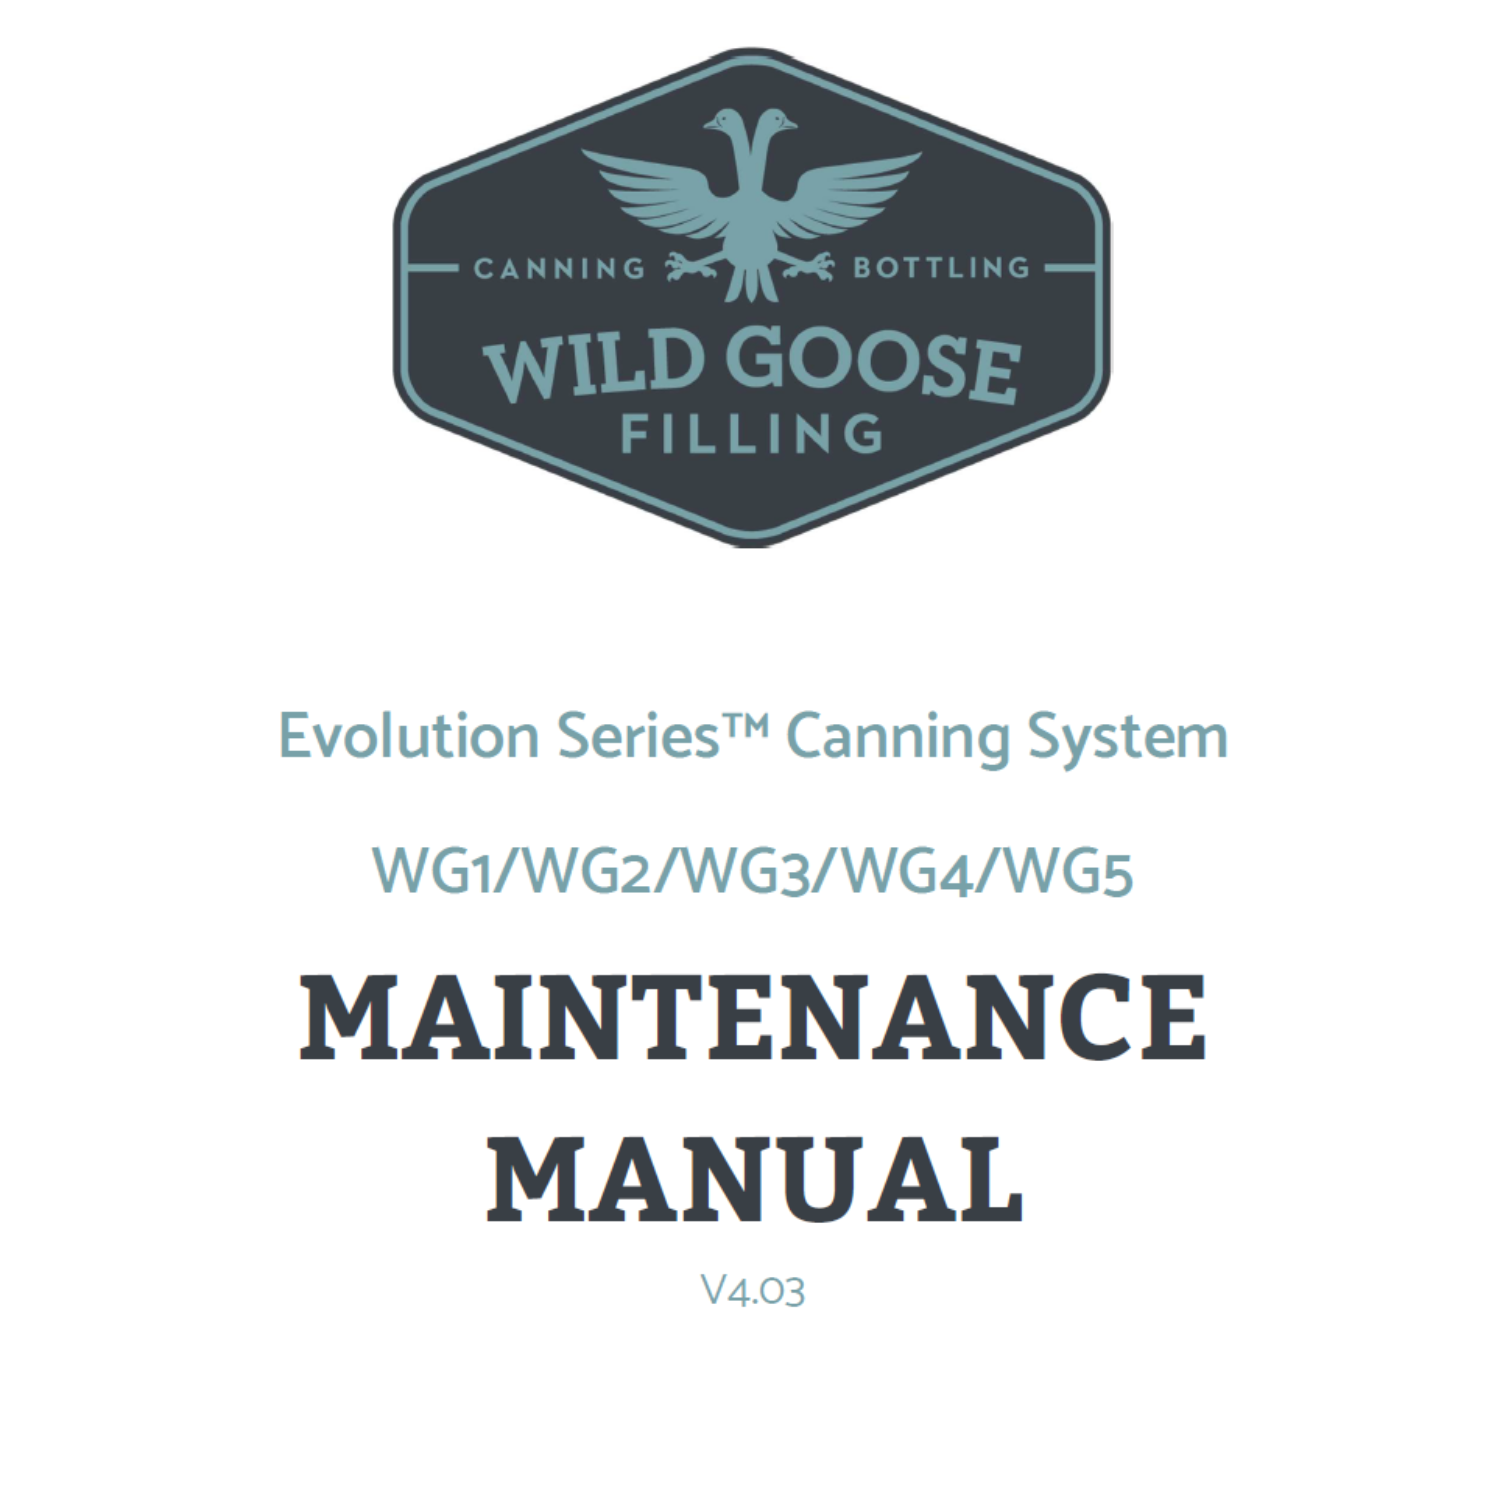 Evolution Series Maintenance Manual